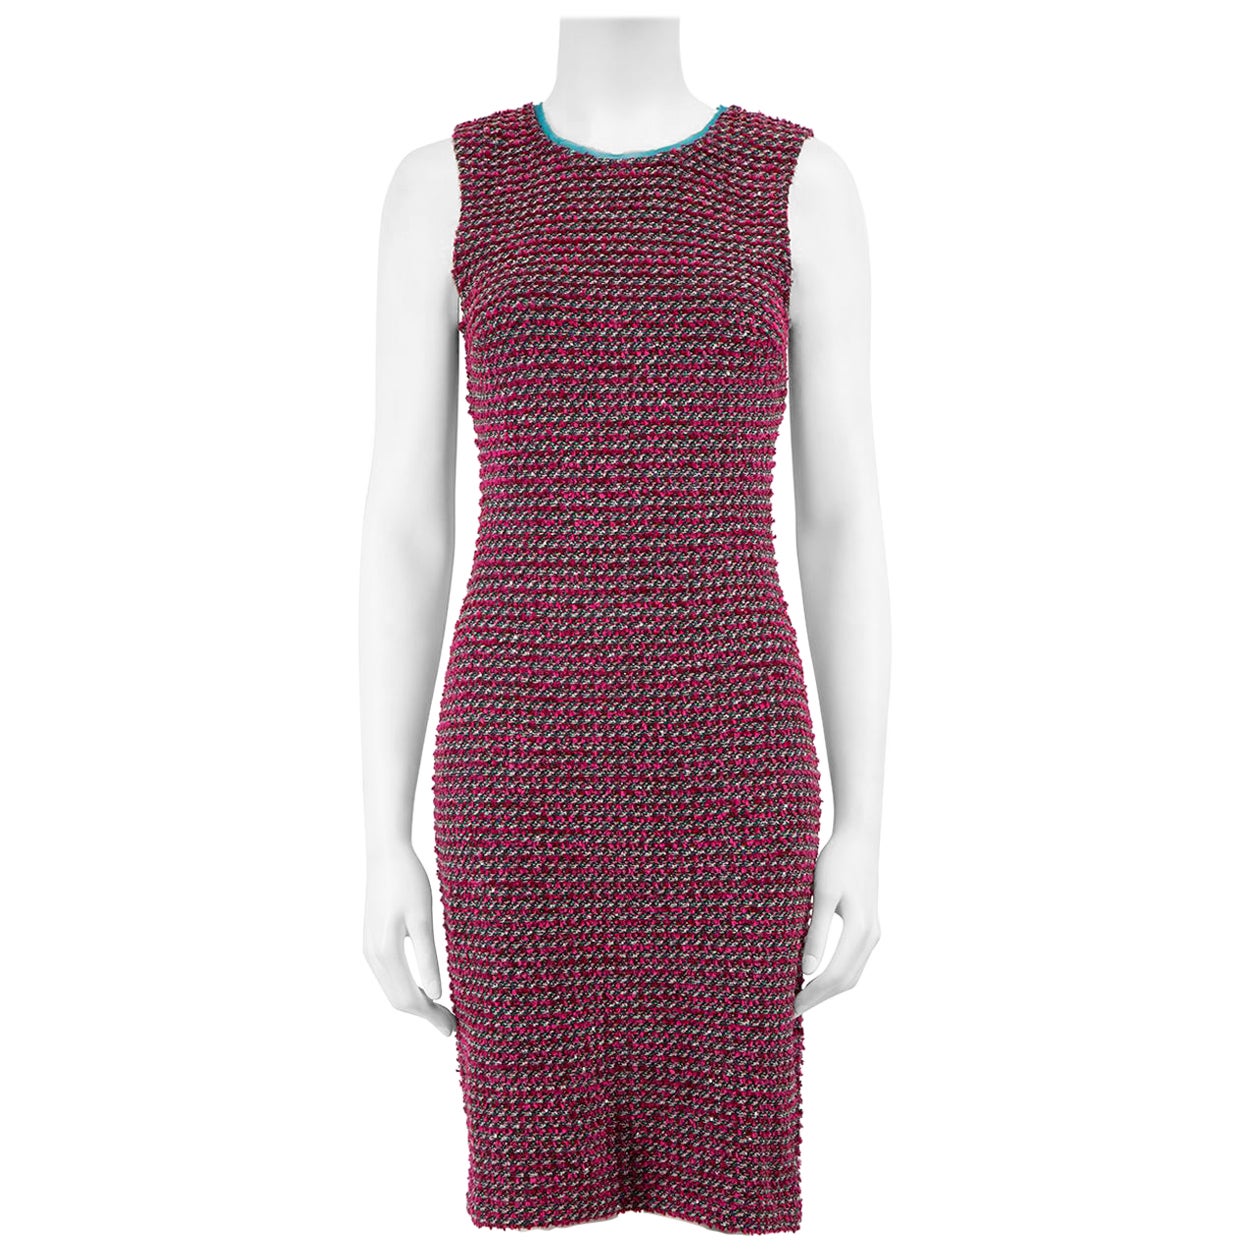 St. John Pink Tweed Contrast Neckline Dress Size XS